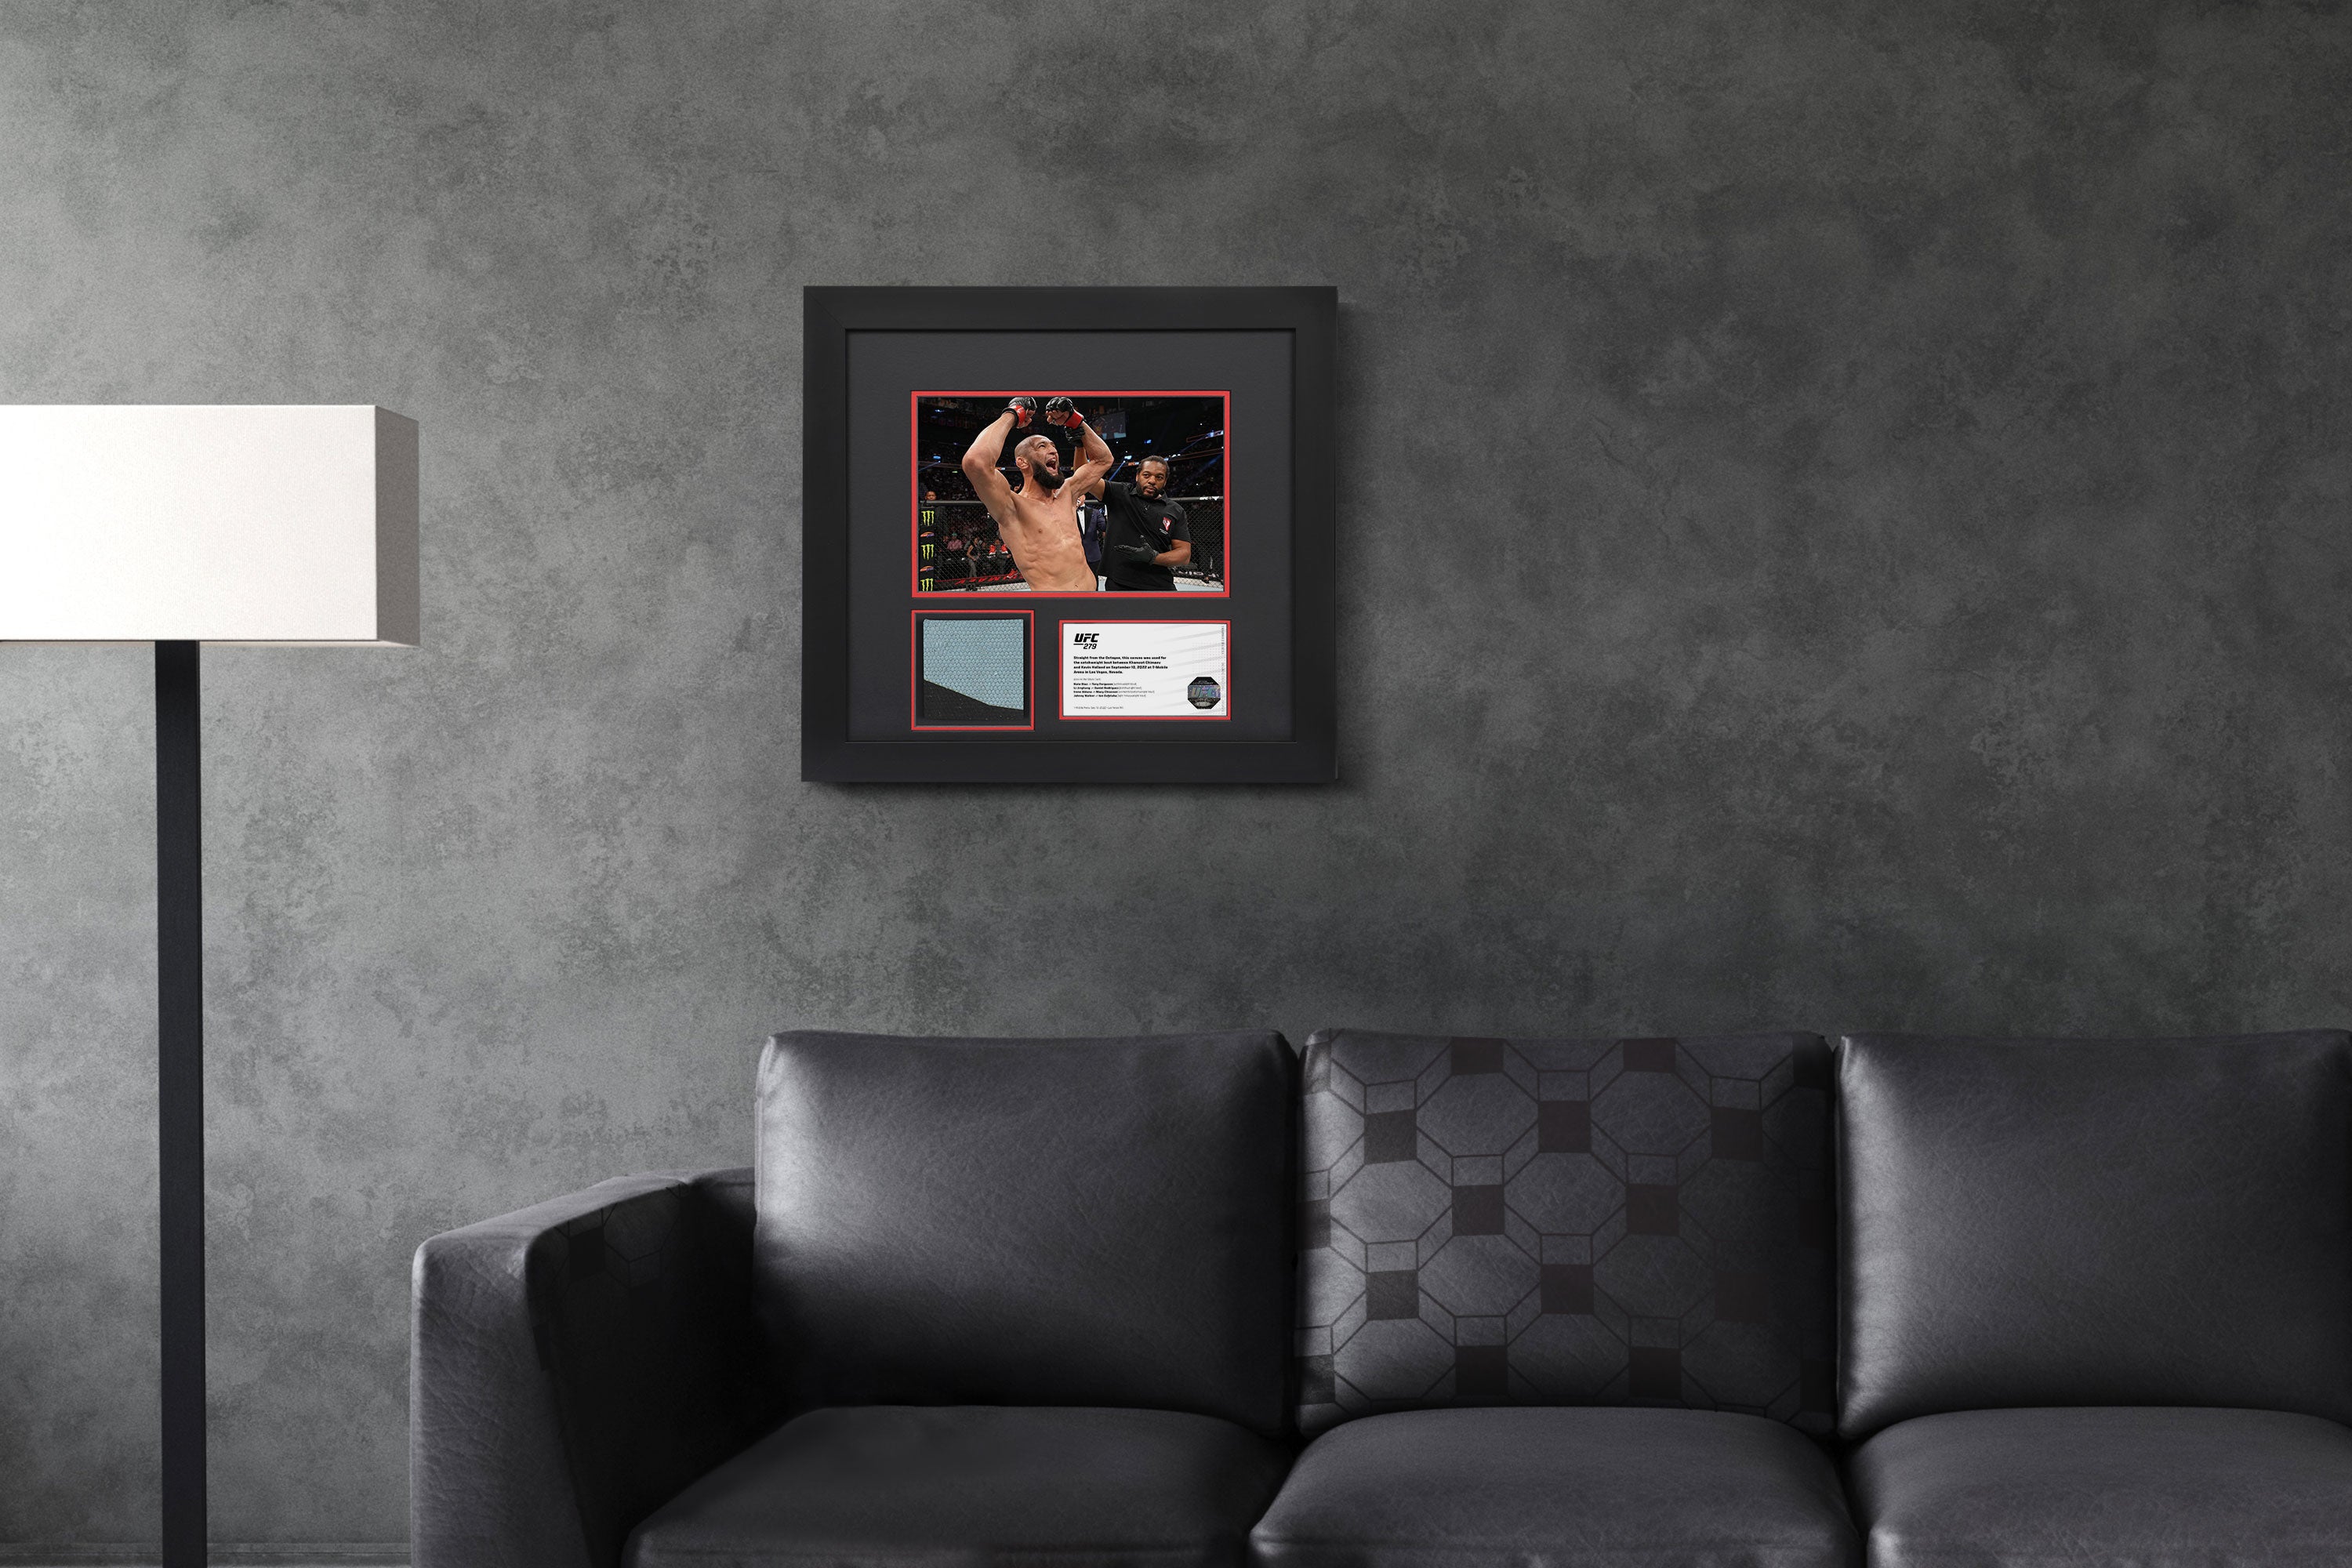 UFC 279: Chimaev vs Holland Canvas & Photo